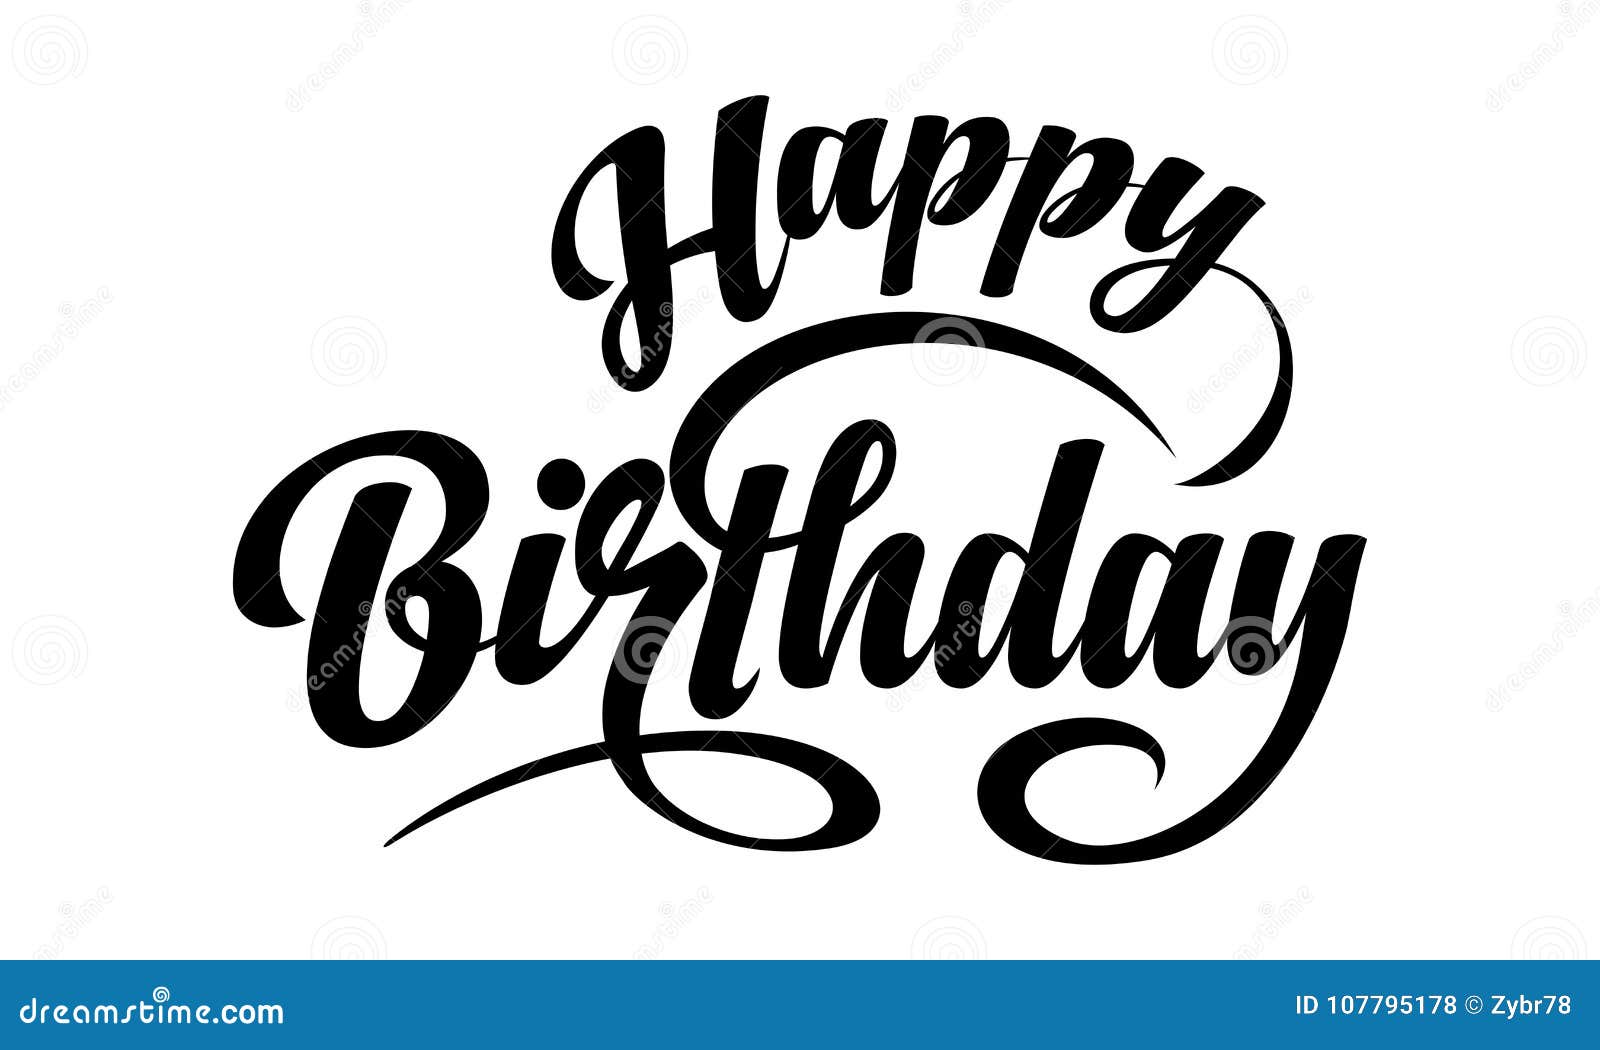 Happy Birthday text stock vector. Illustration of celebration - 107795178